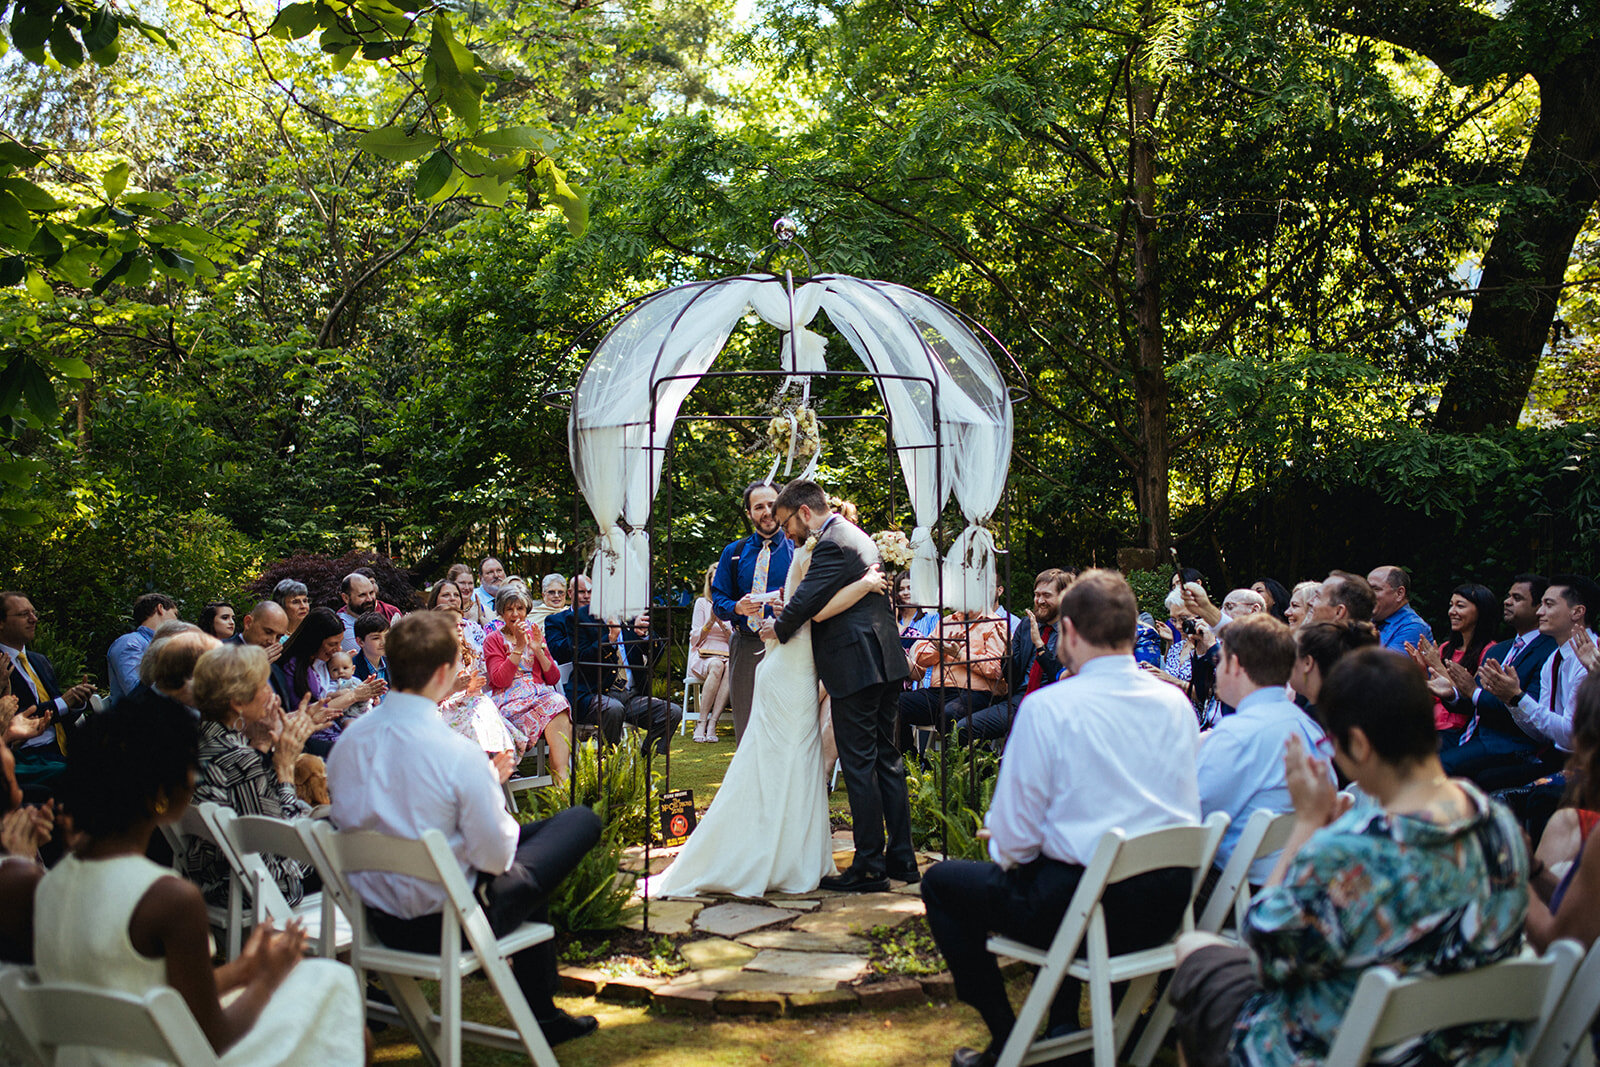 Marrying couple embracing at backyard ceremony in Atlanta GA Shawnee Custalow Queer Wedding Photographer